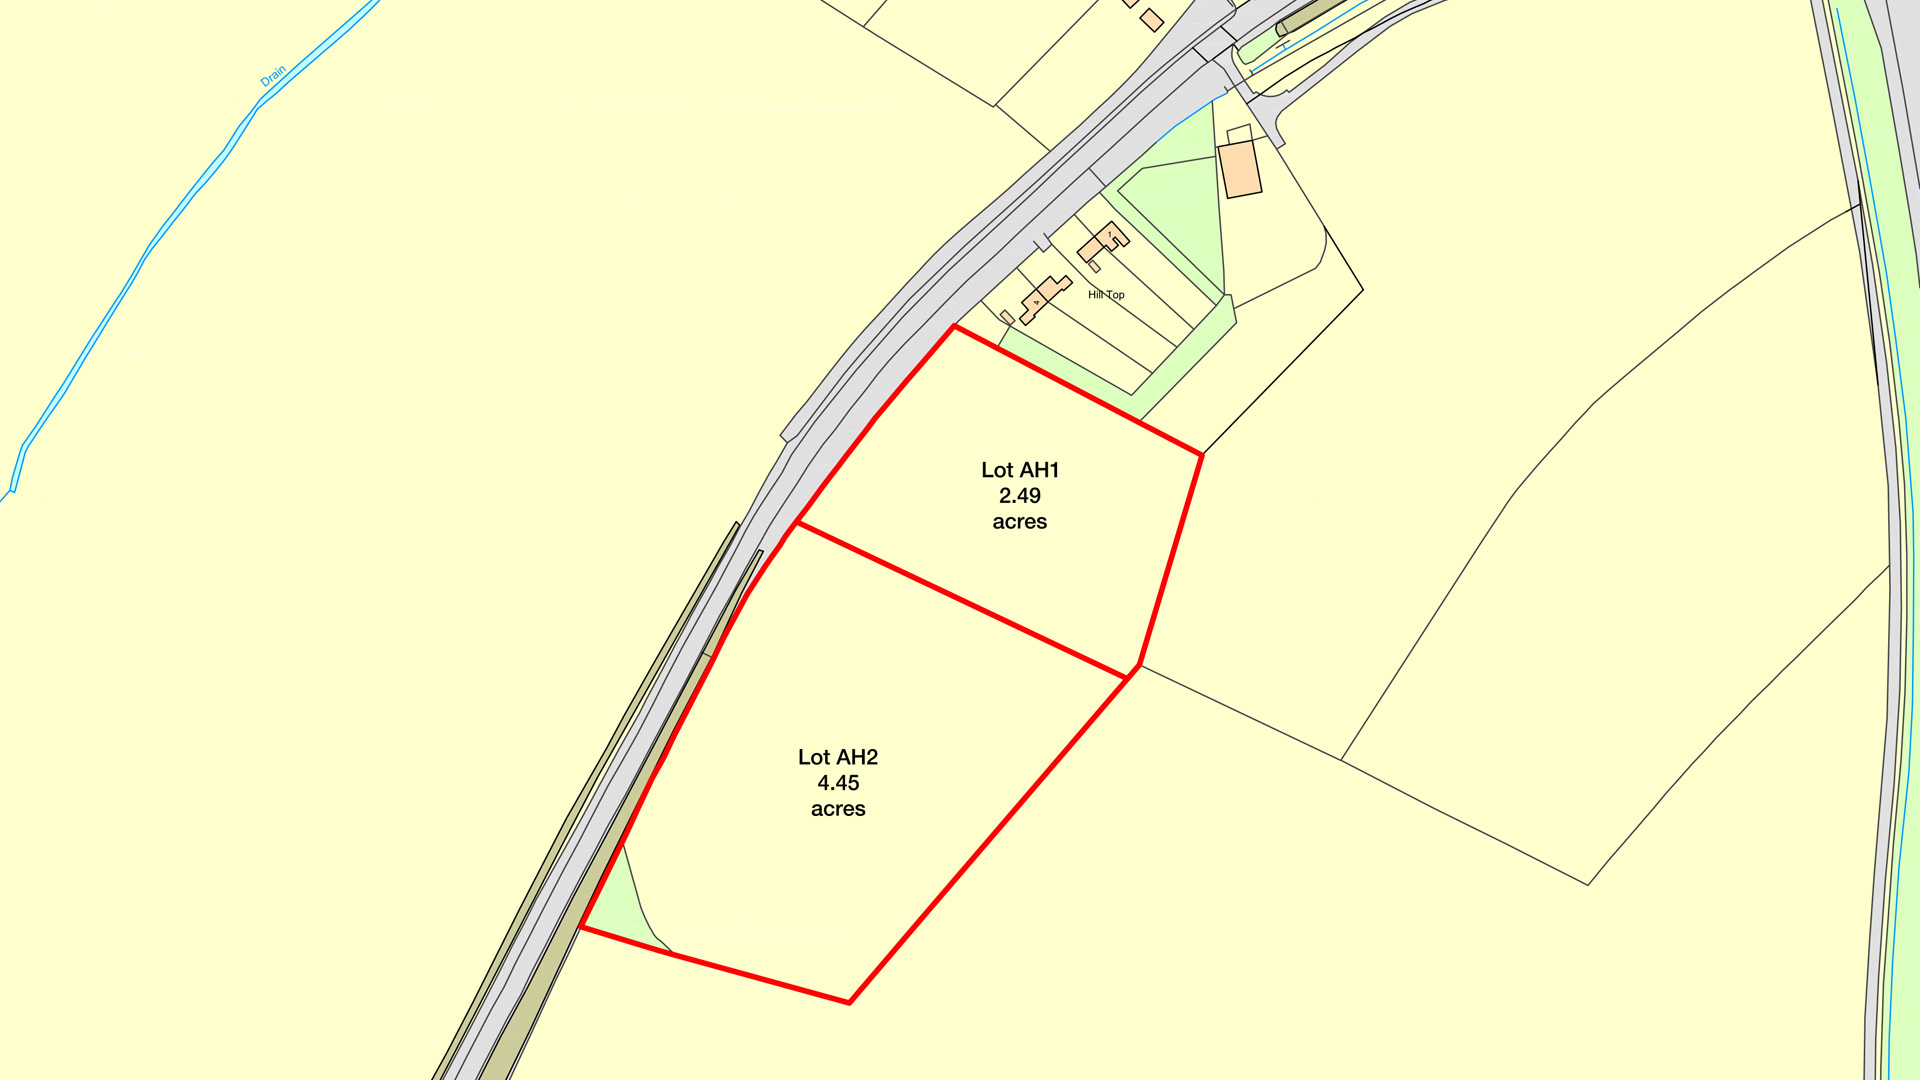 Land for sale in Alconbury Weston site plan